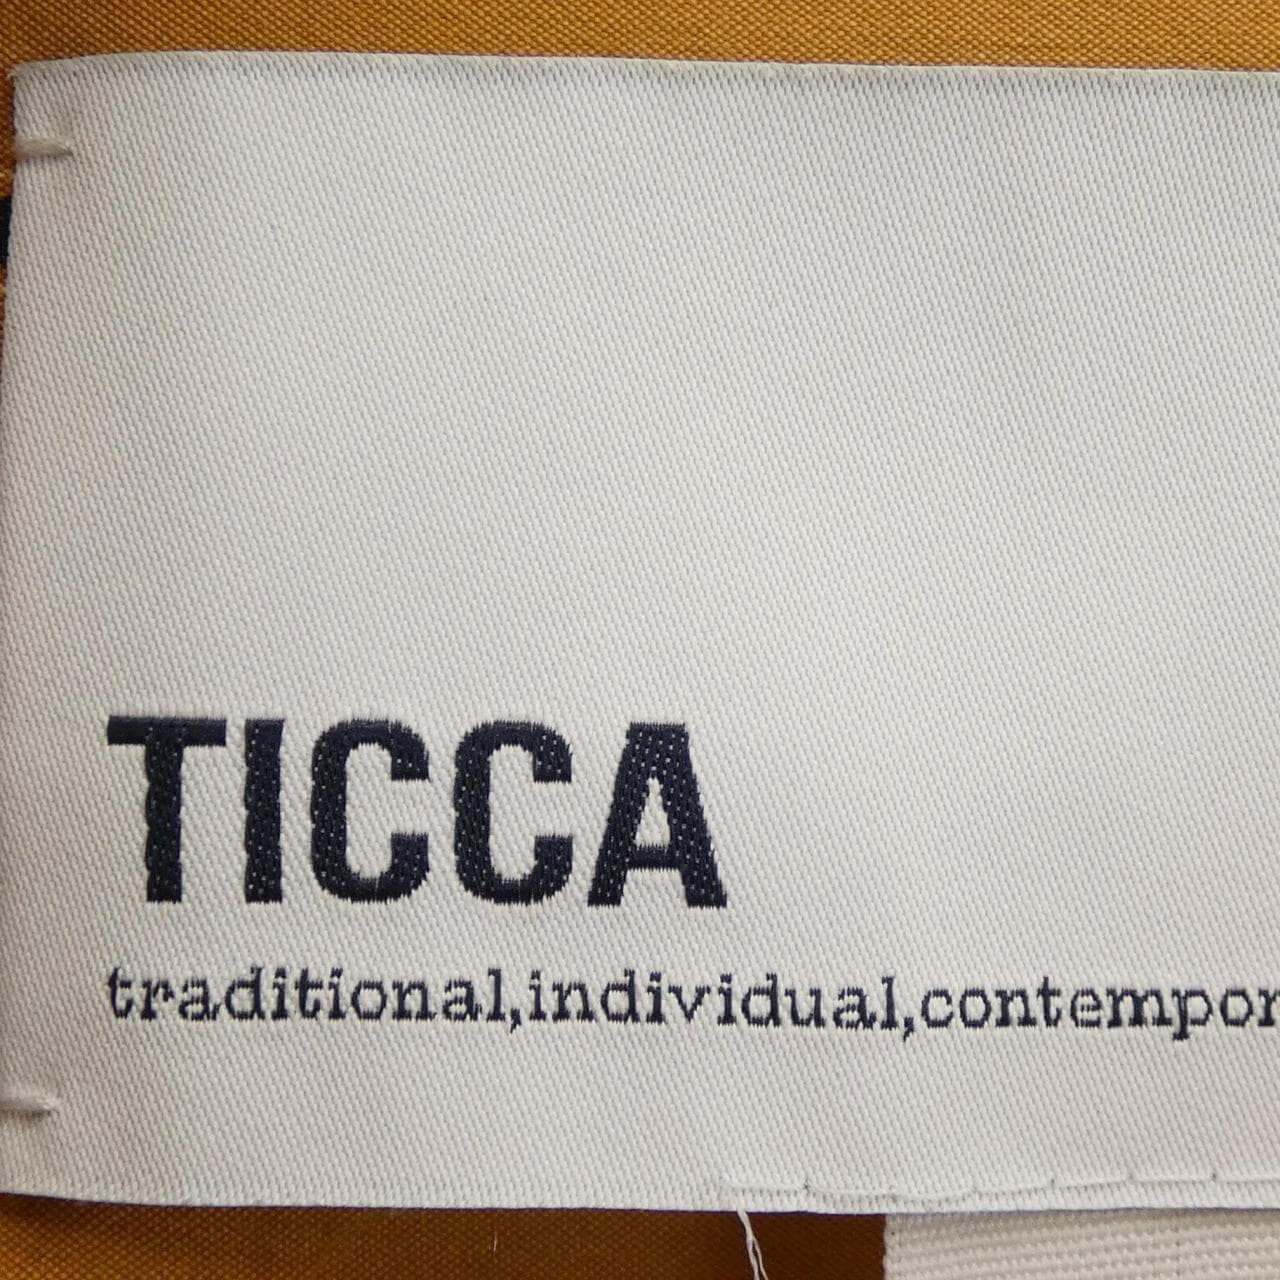 TICCA連衣裙